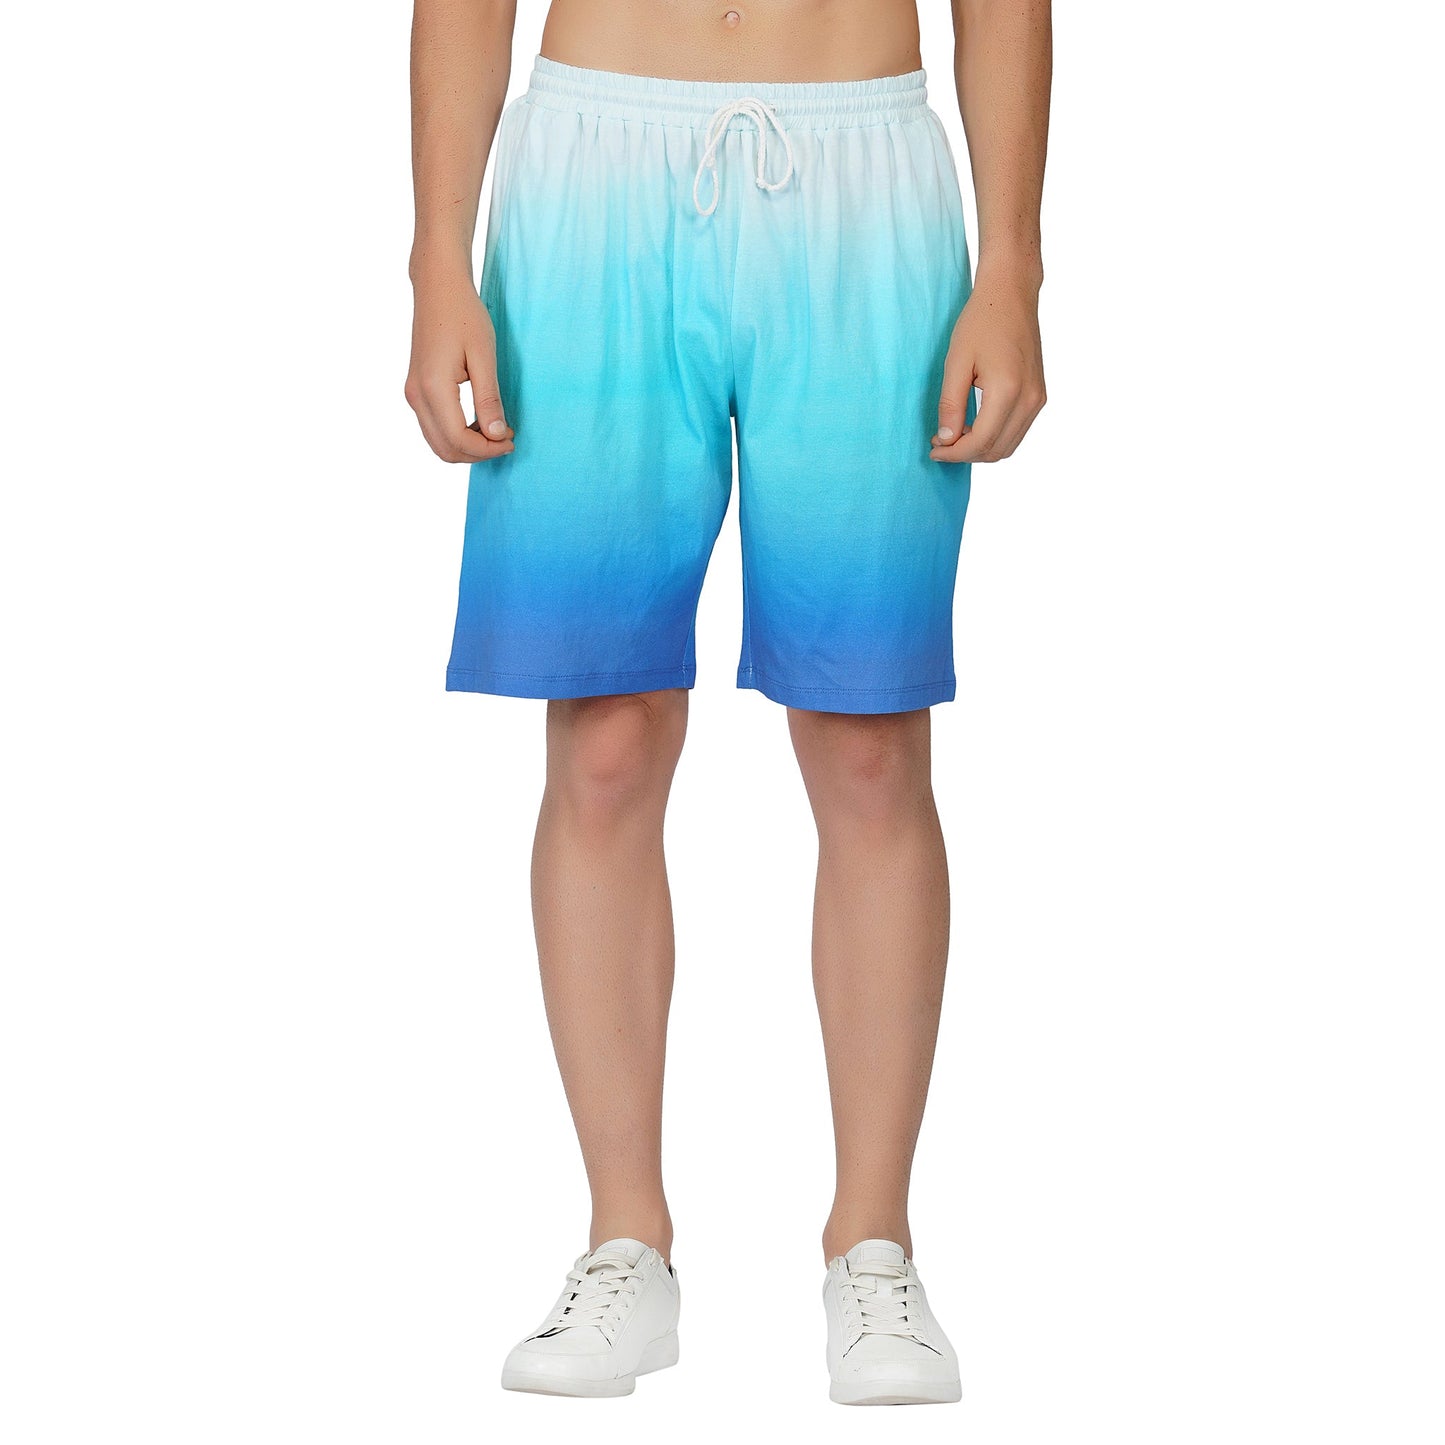 SLAY. Men's Ombre Shorts